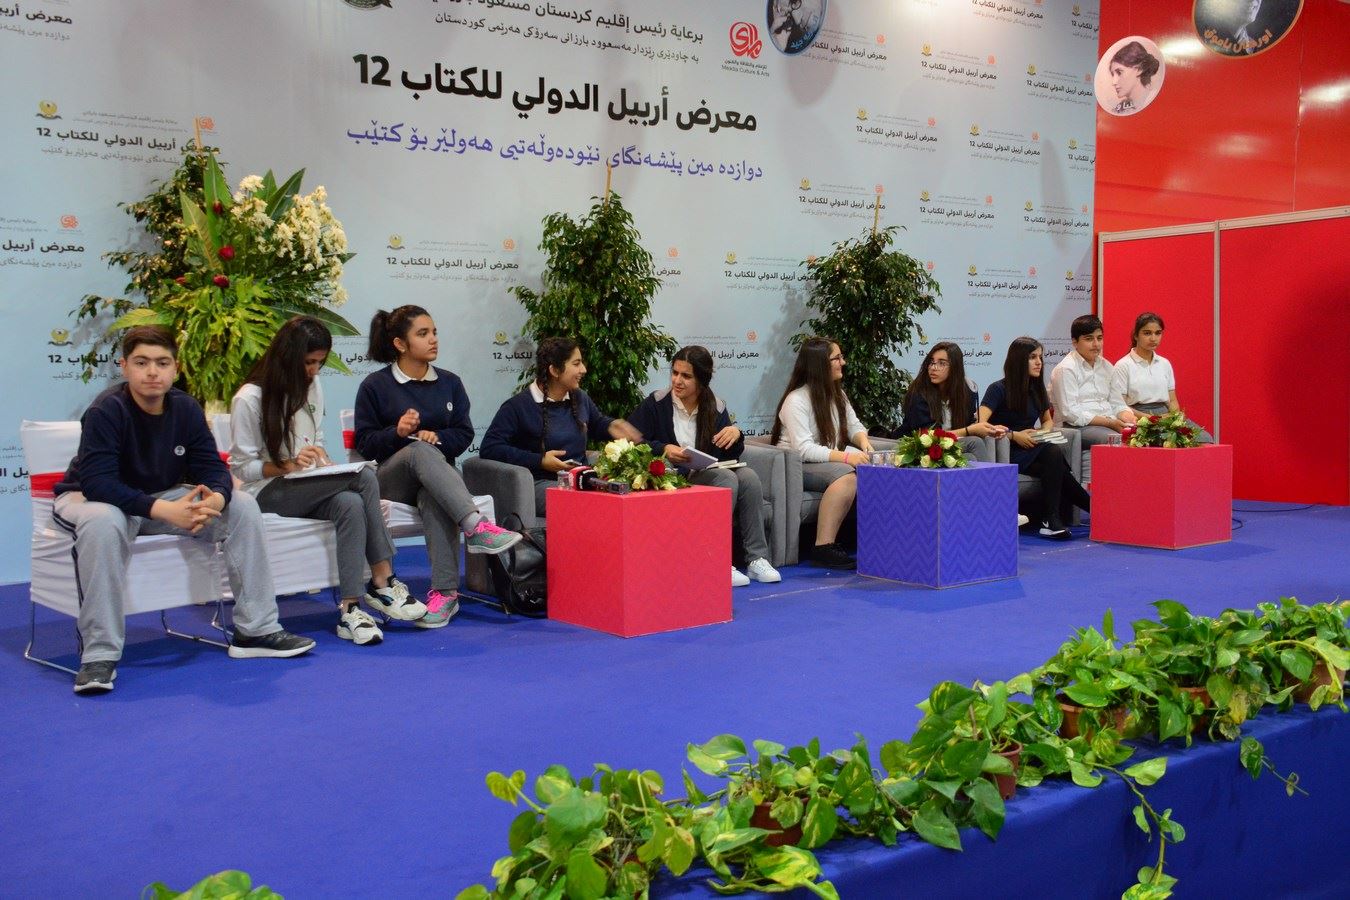 Debate Club in Erbil International Book Fair